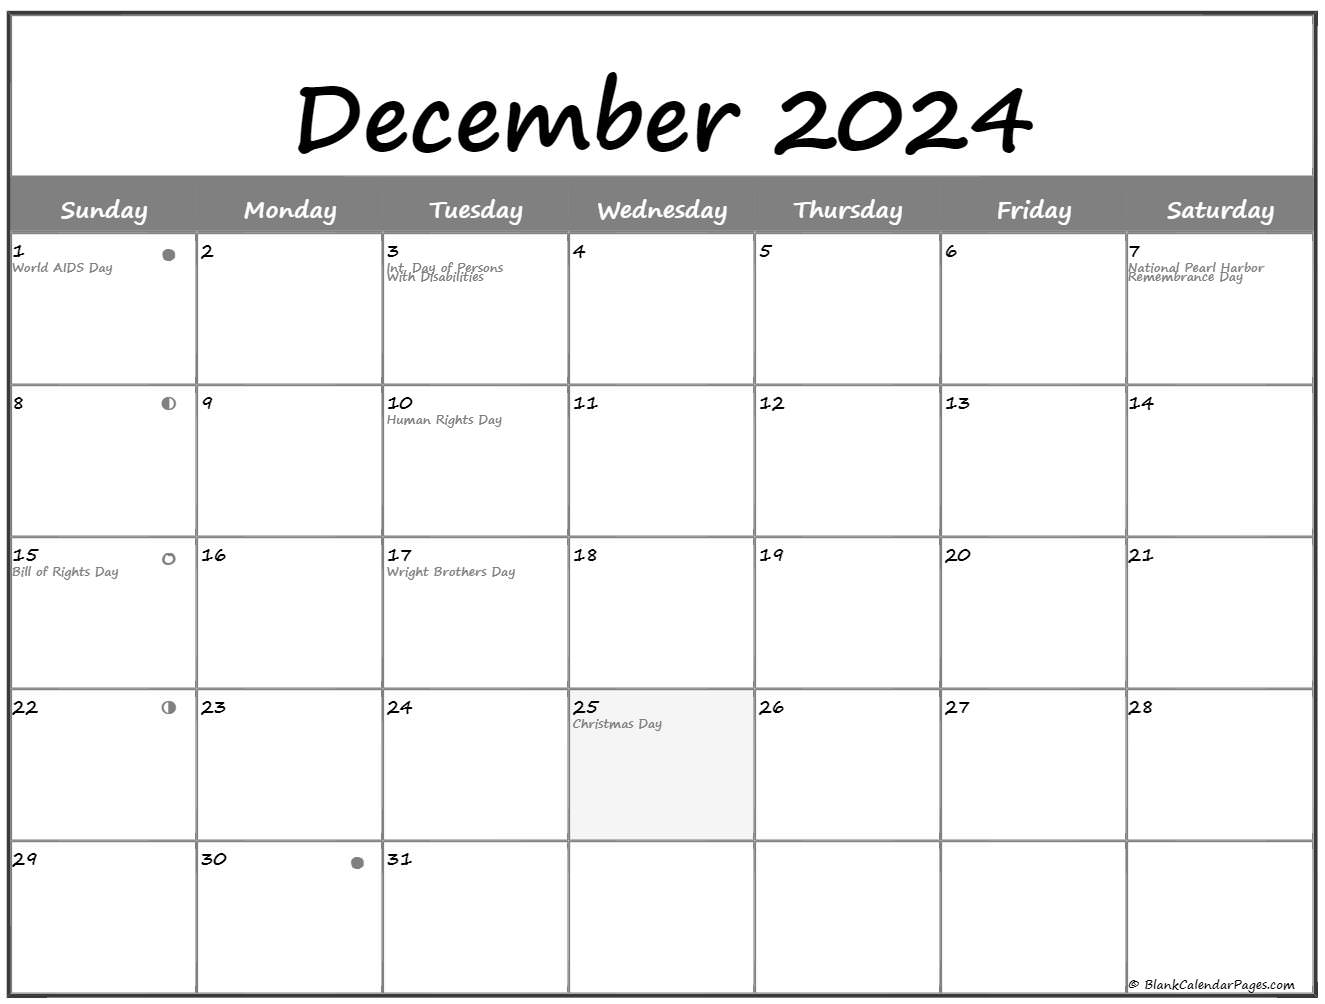 december-2024-lunar-calendar-moon-phase-calendar